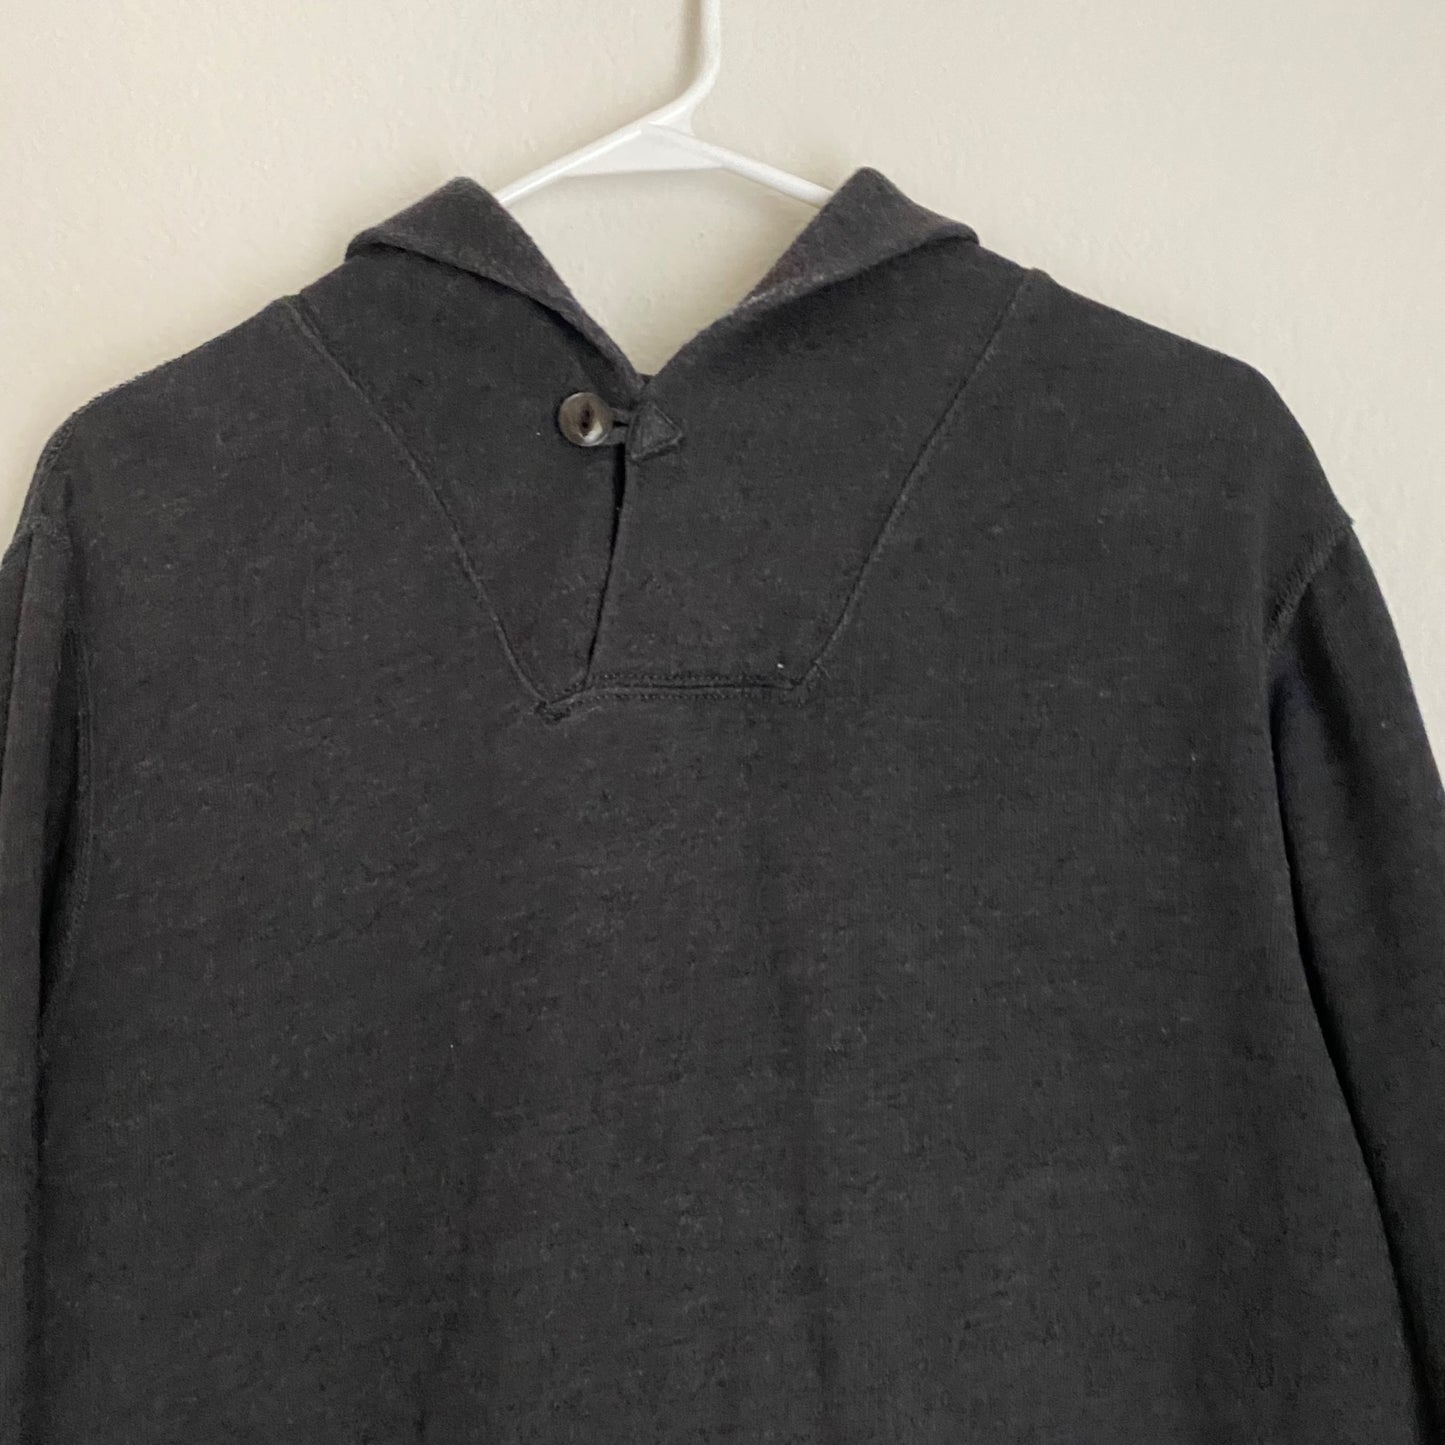 J Crew sz L 100% cotton vintage fleece long sleeve sweatshirt